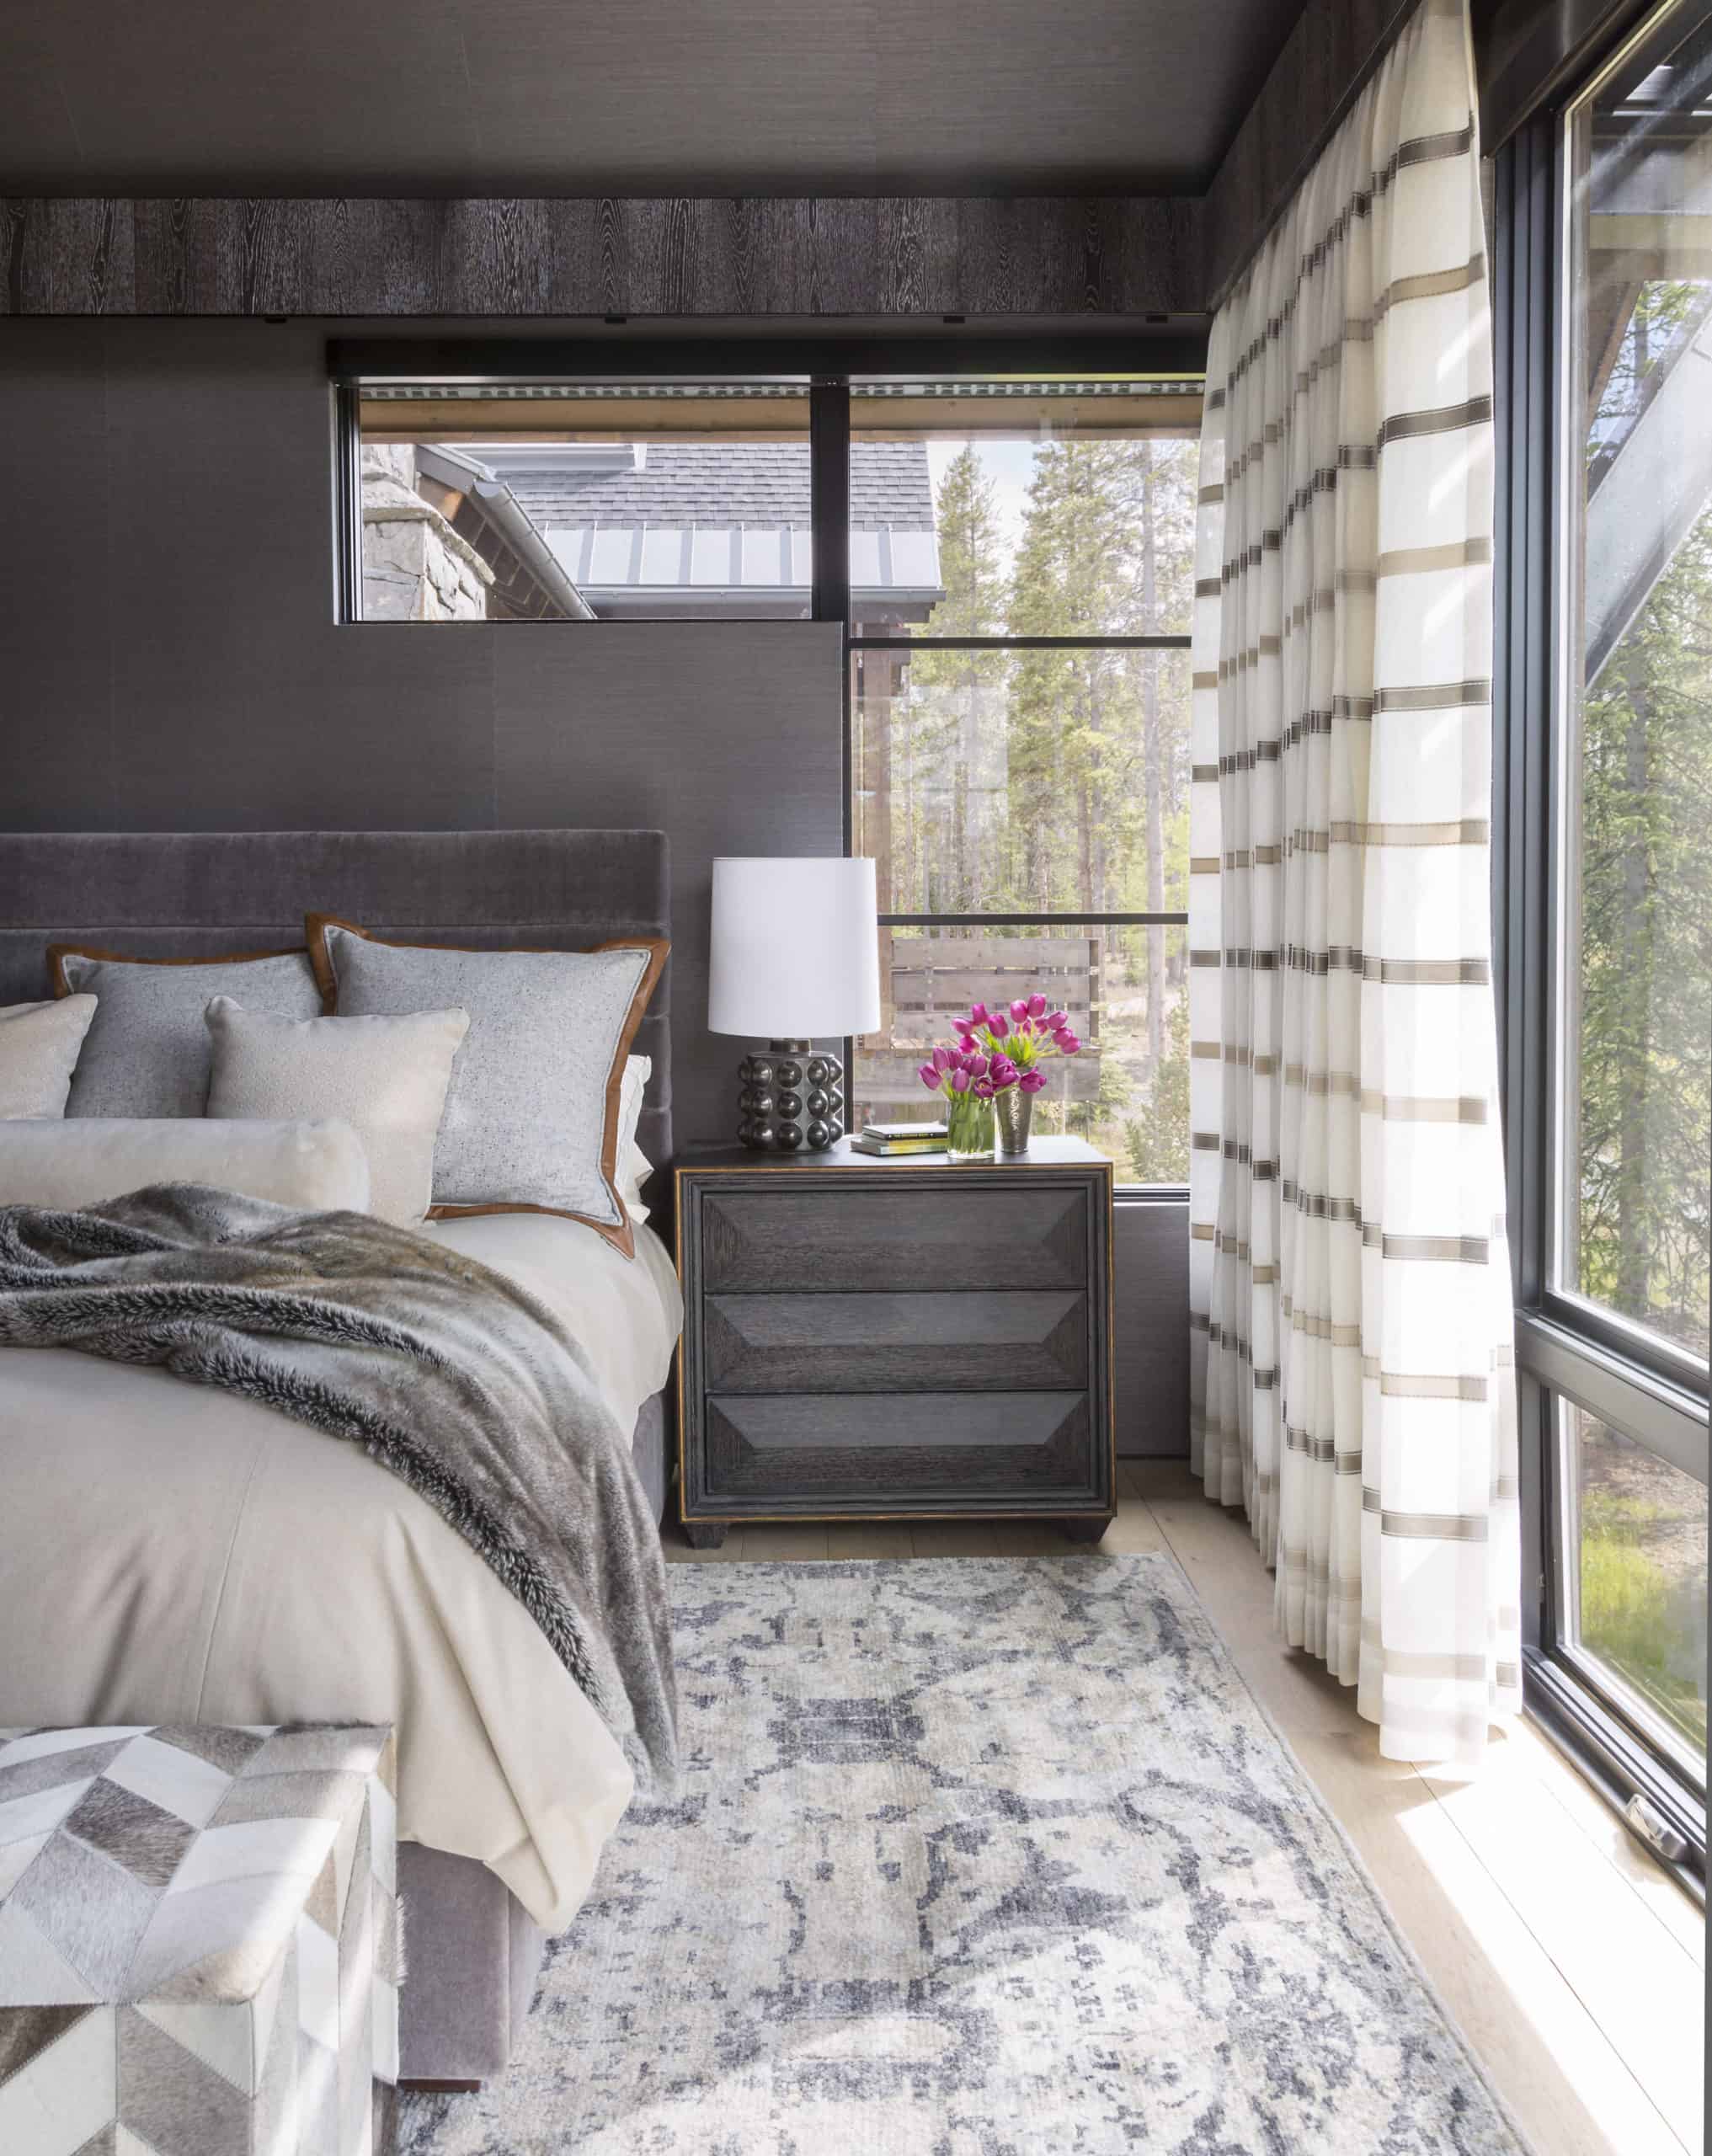 Colorado Mountain modern comfortable bedroom furniture and grasscloth wallpaper